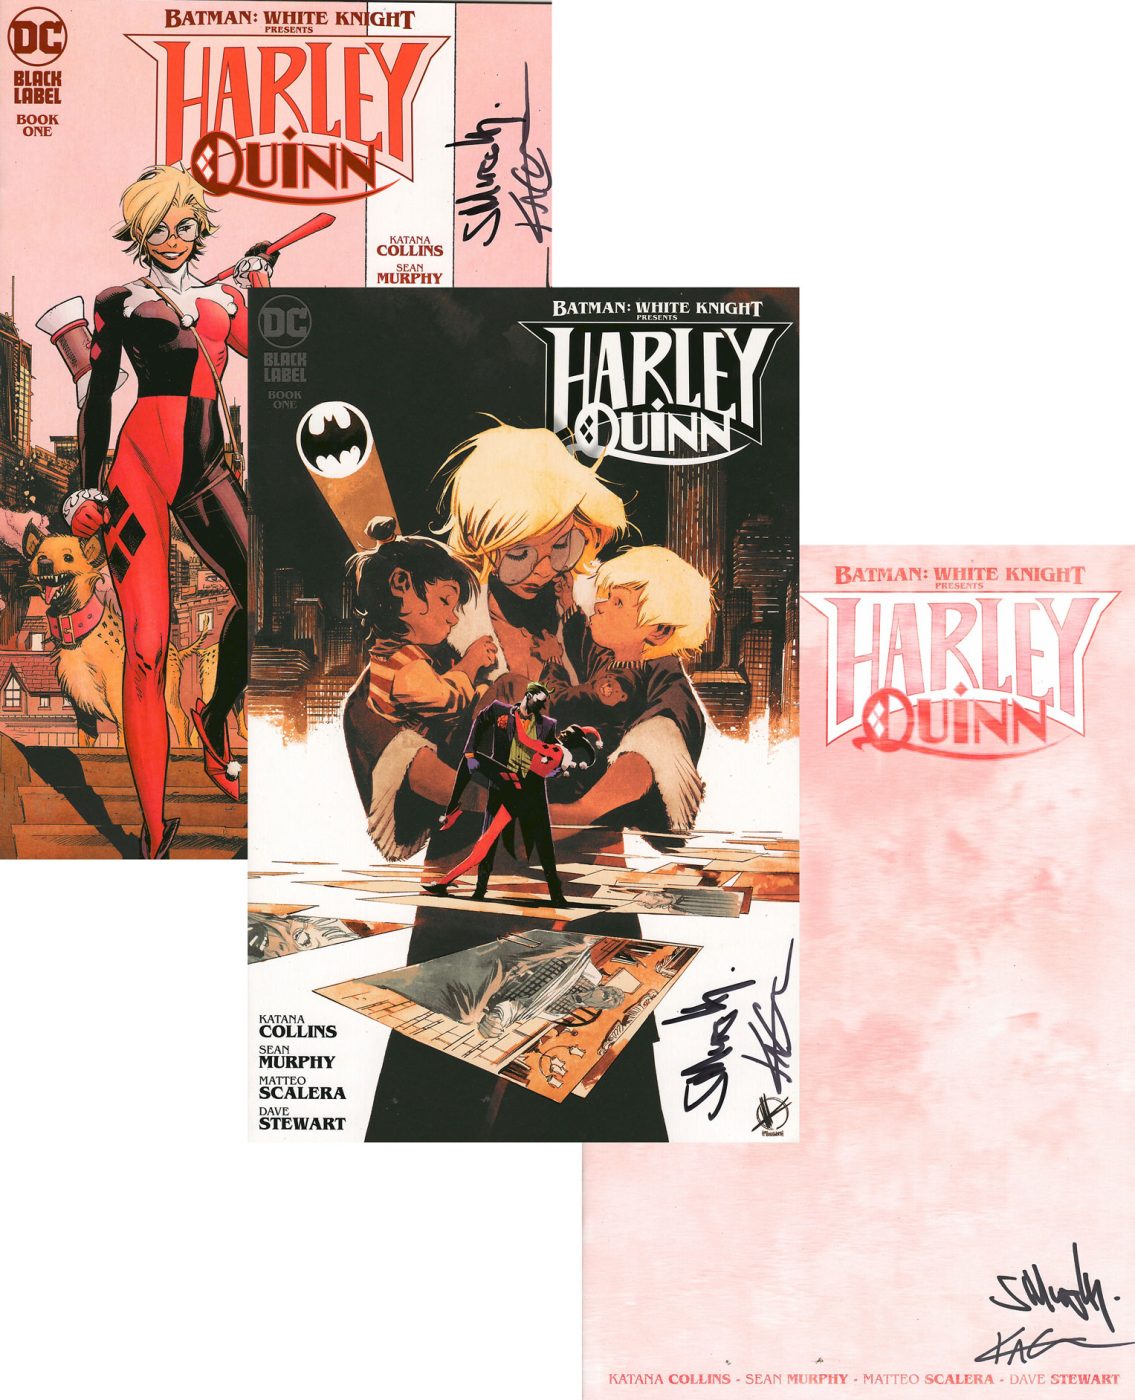 3x Batman White Knight Presents: Harley Quinn #1 (SIGNED BY SEAN MURPHY & KATANA COLLINS)